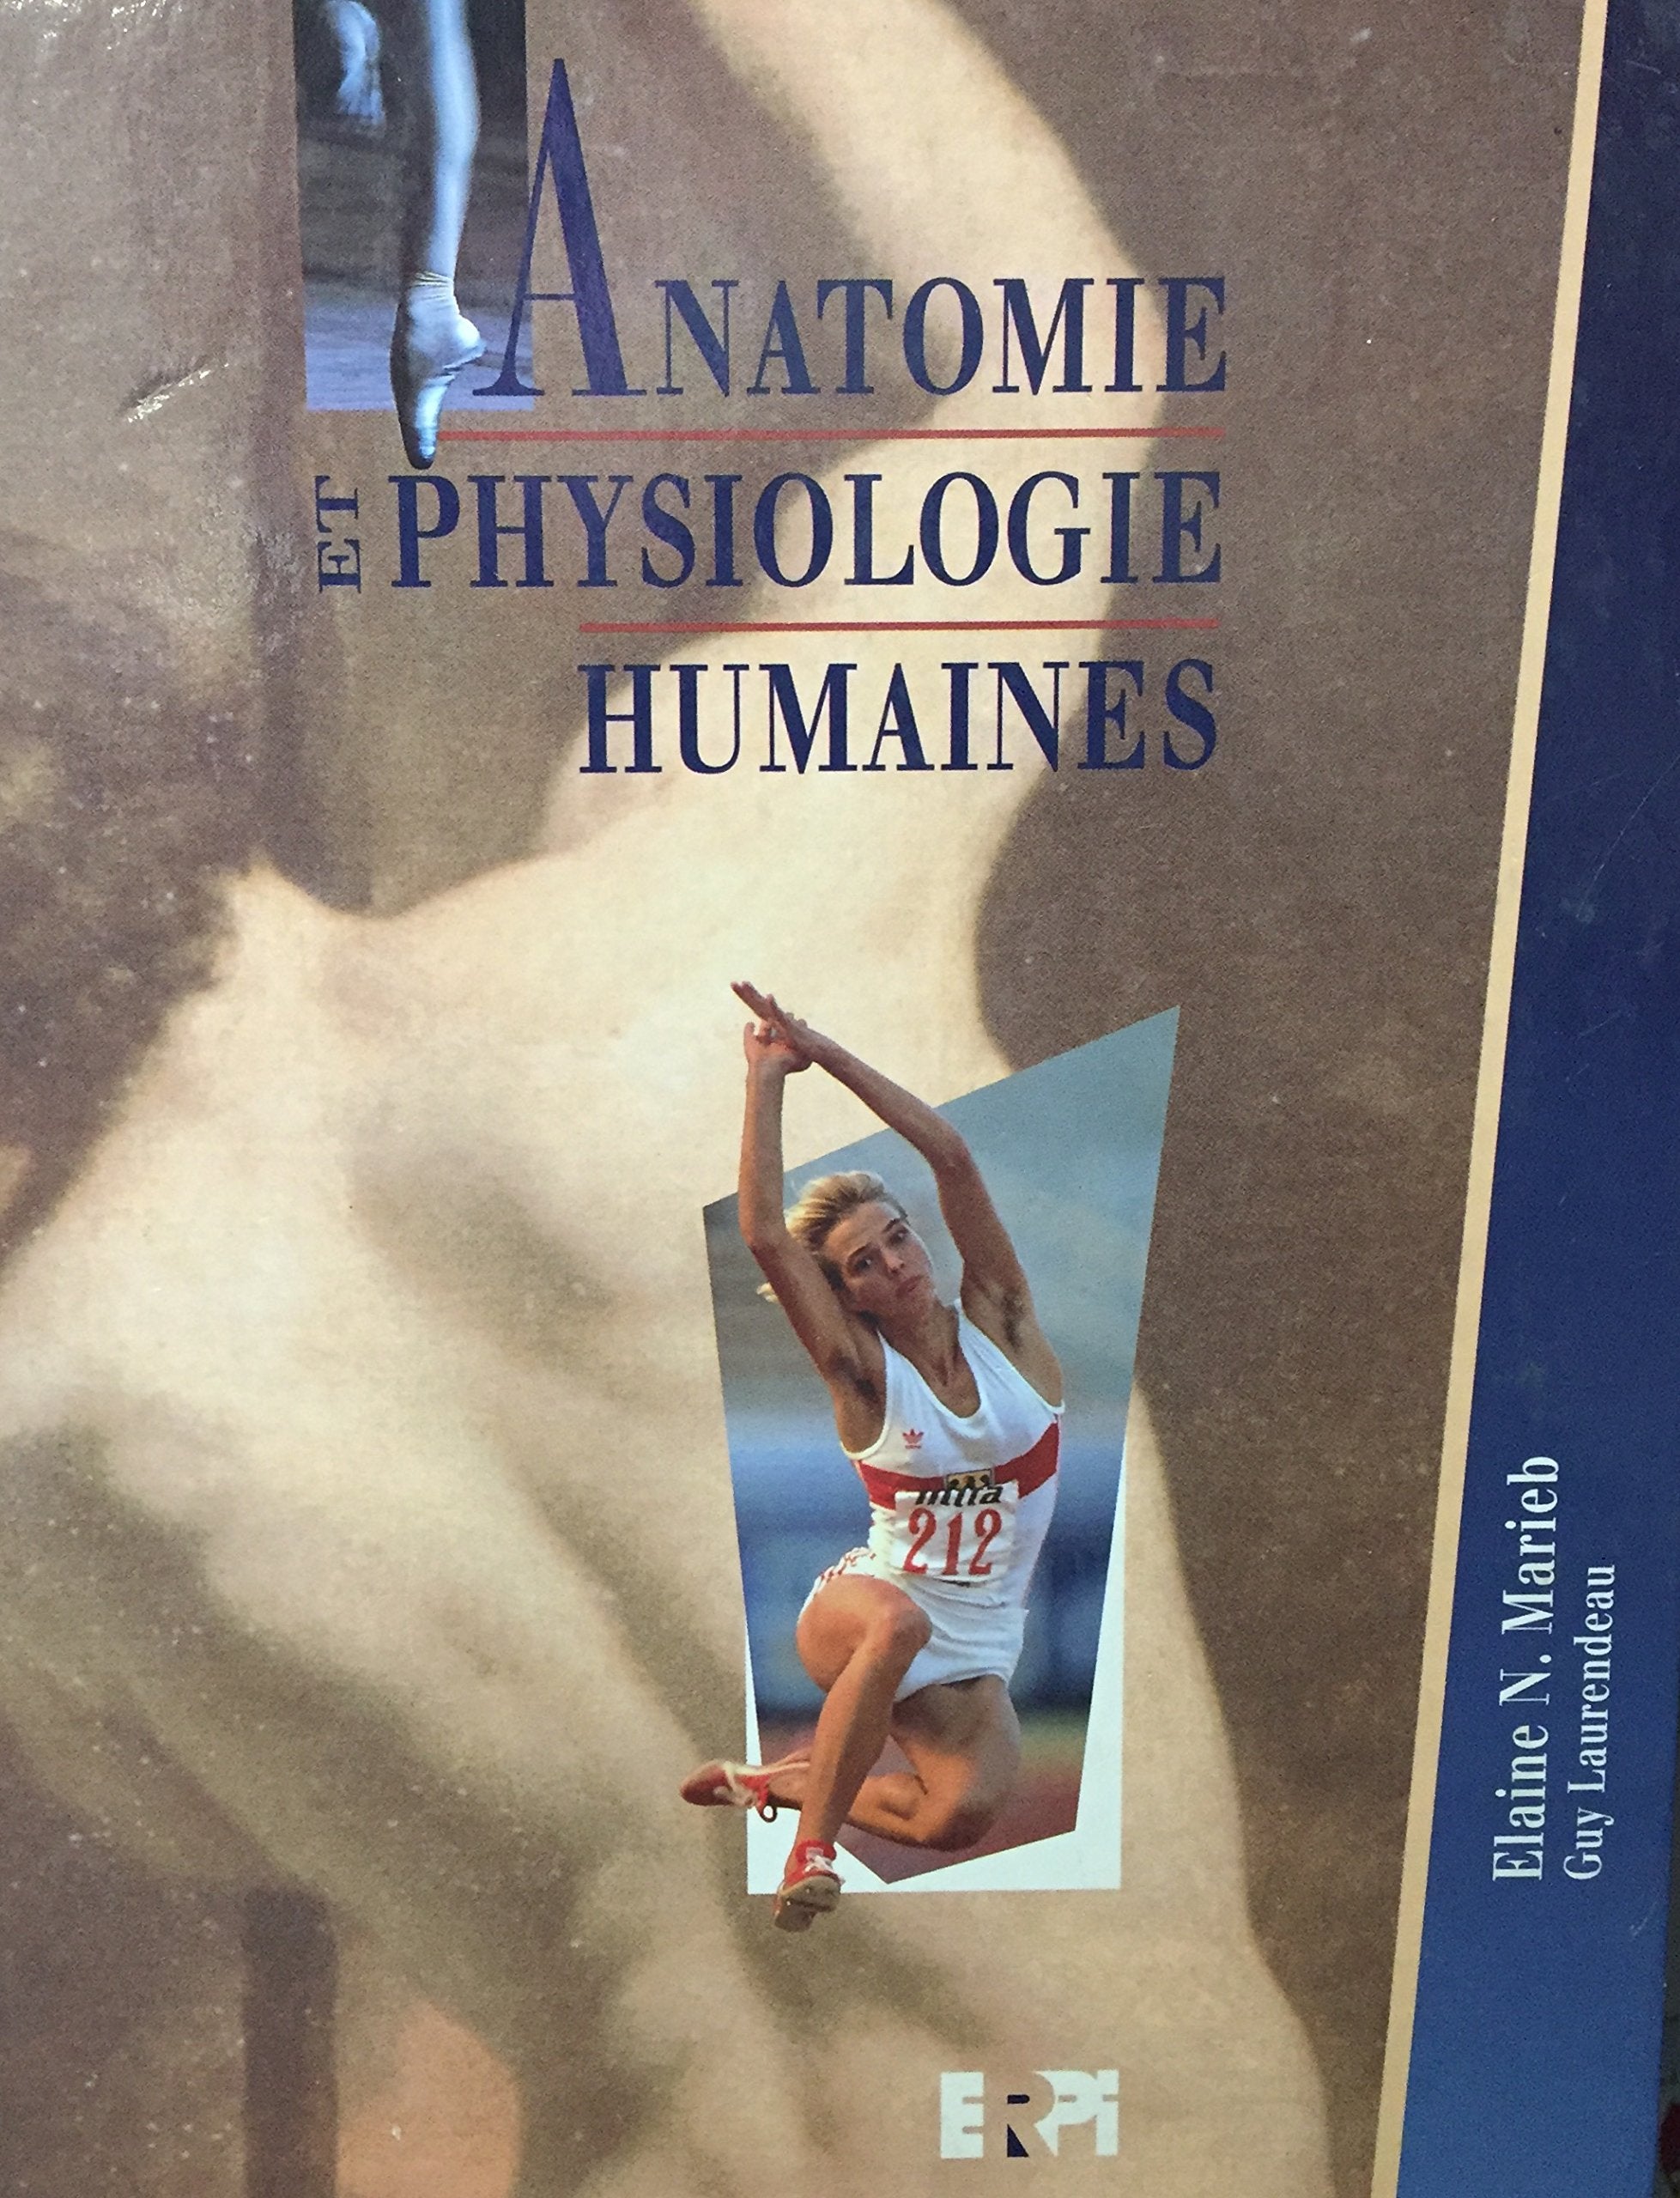 Anatomie et physiologie humaines - Guy Laurendeau